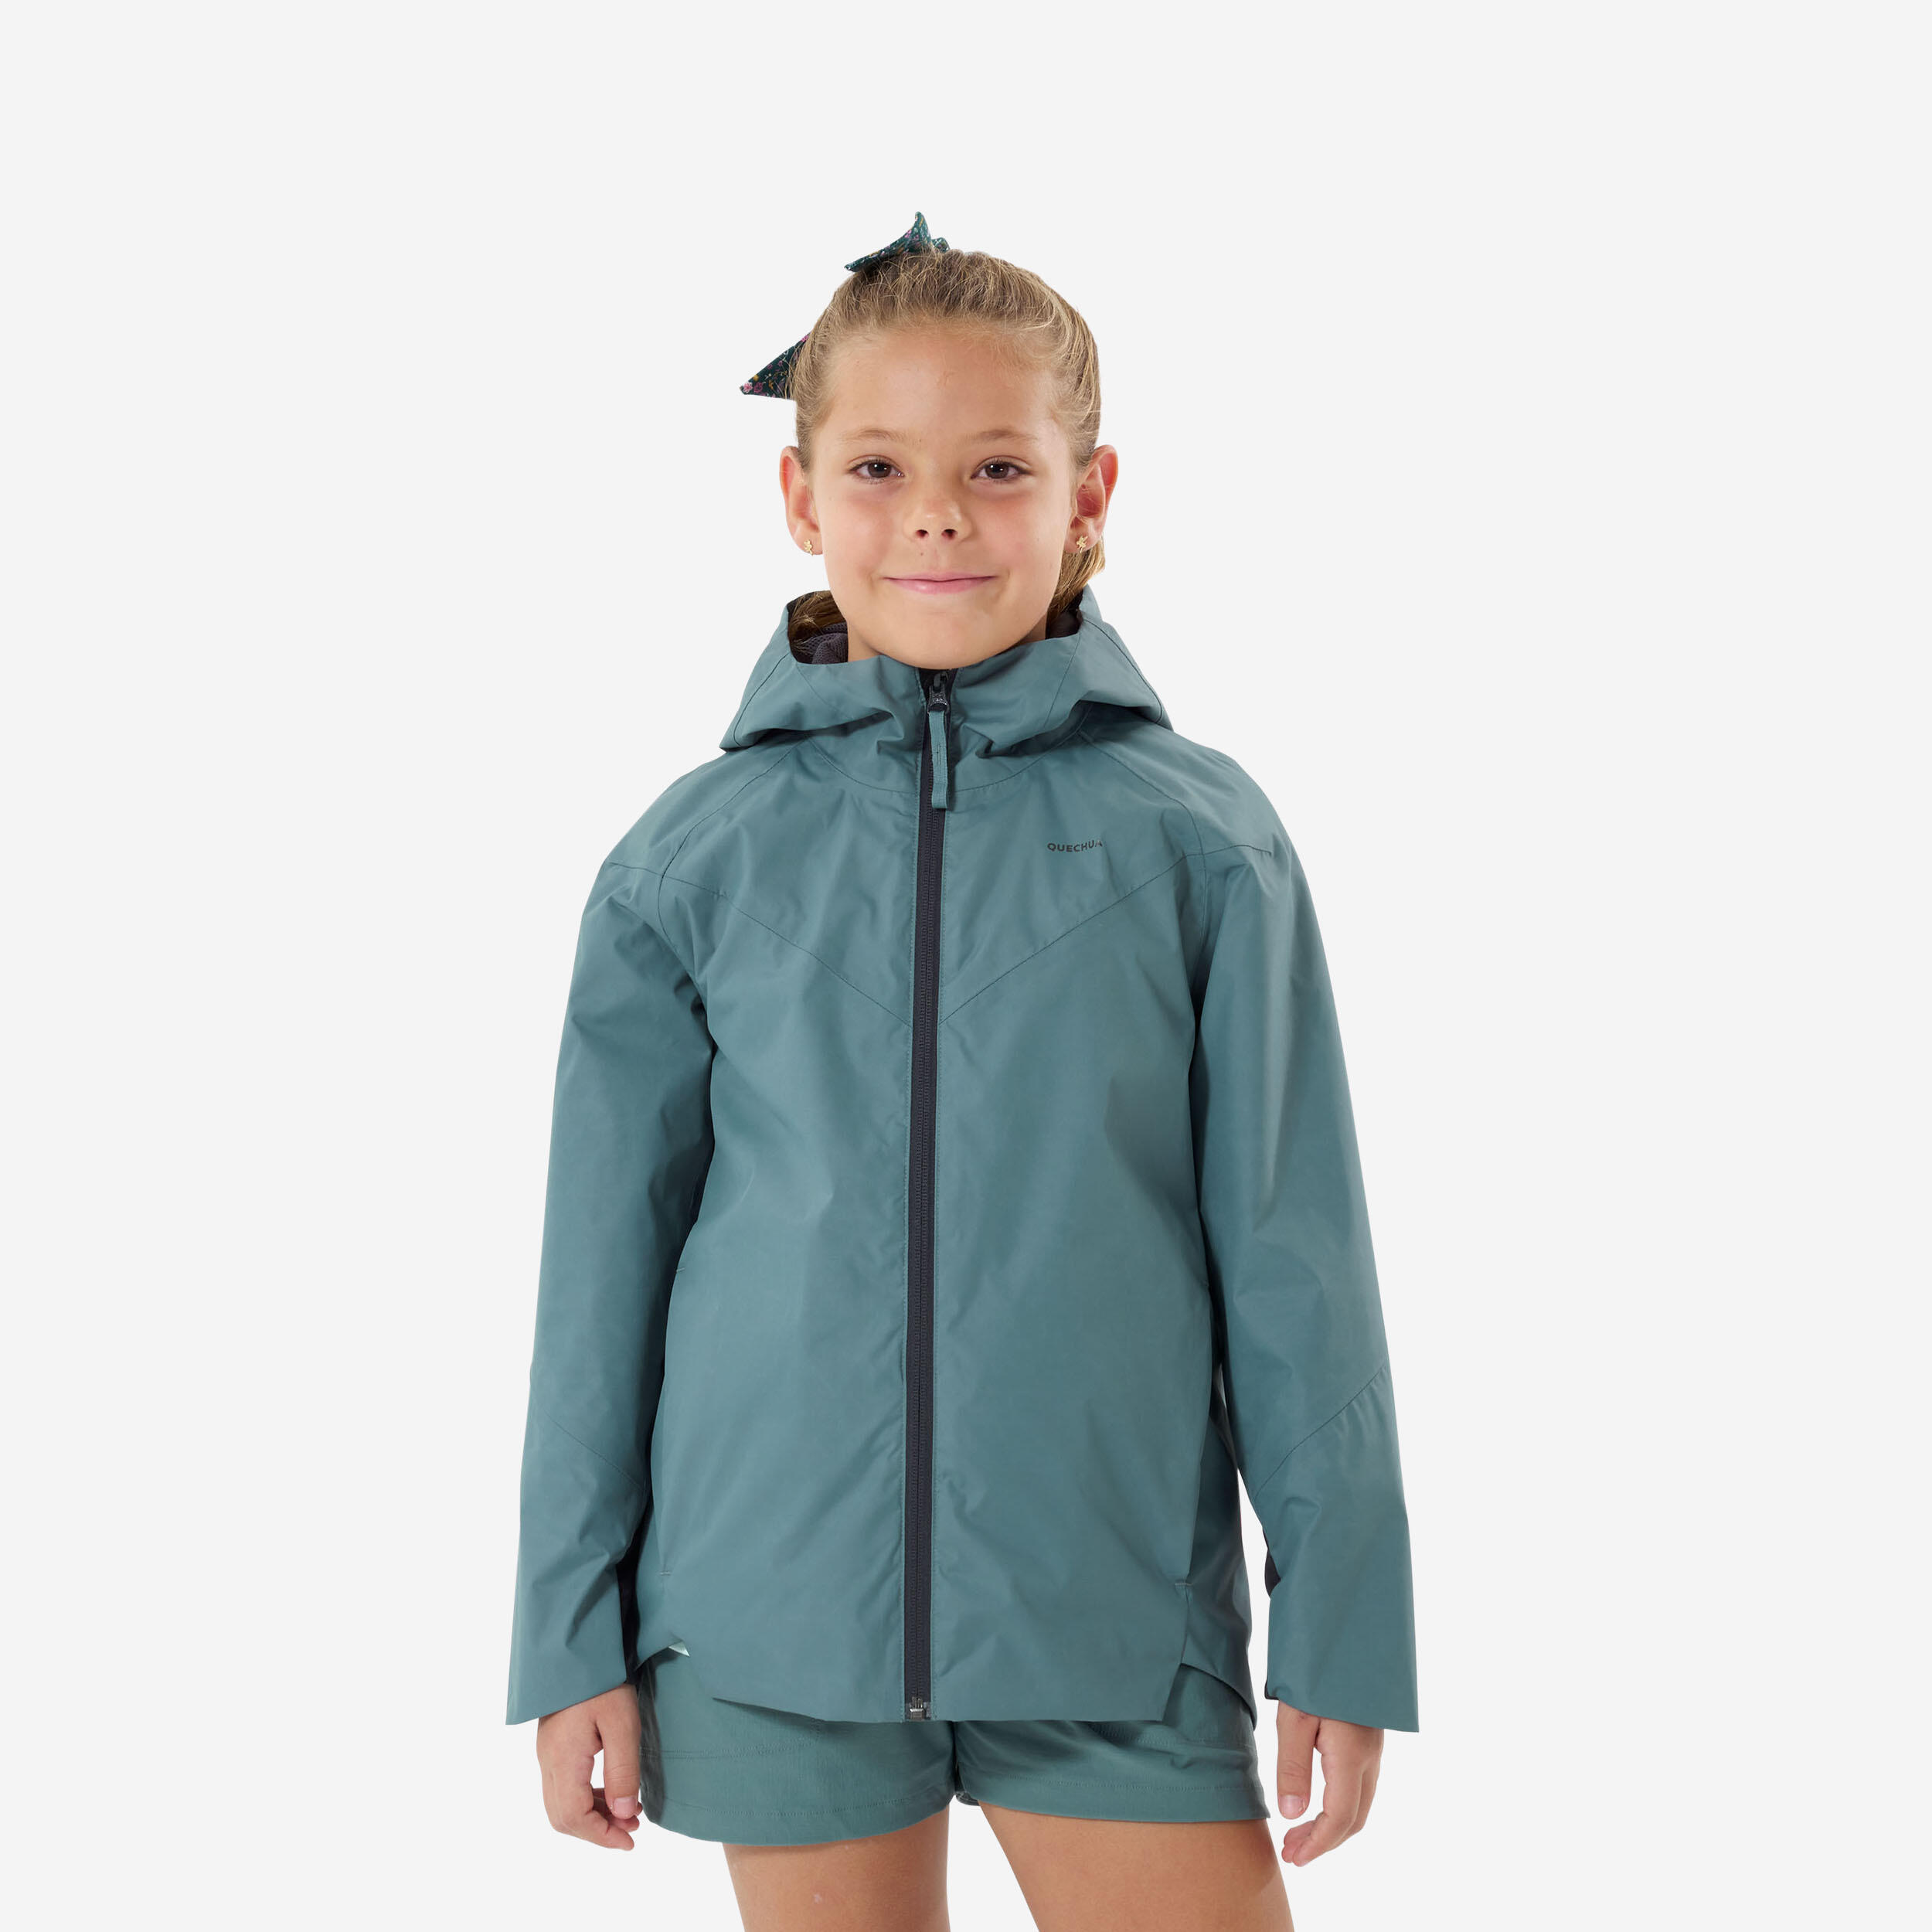 Kids’ Hiking Waterproof Jacket – MH 500 Green